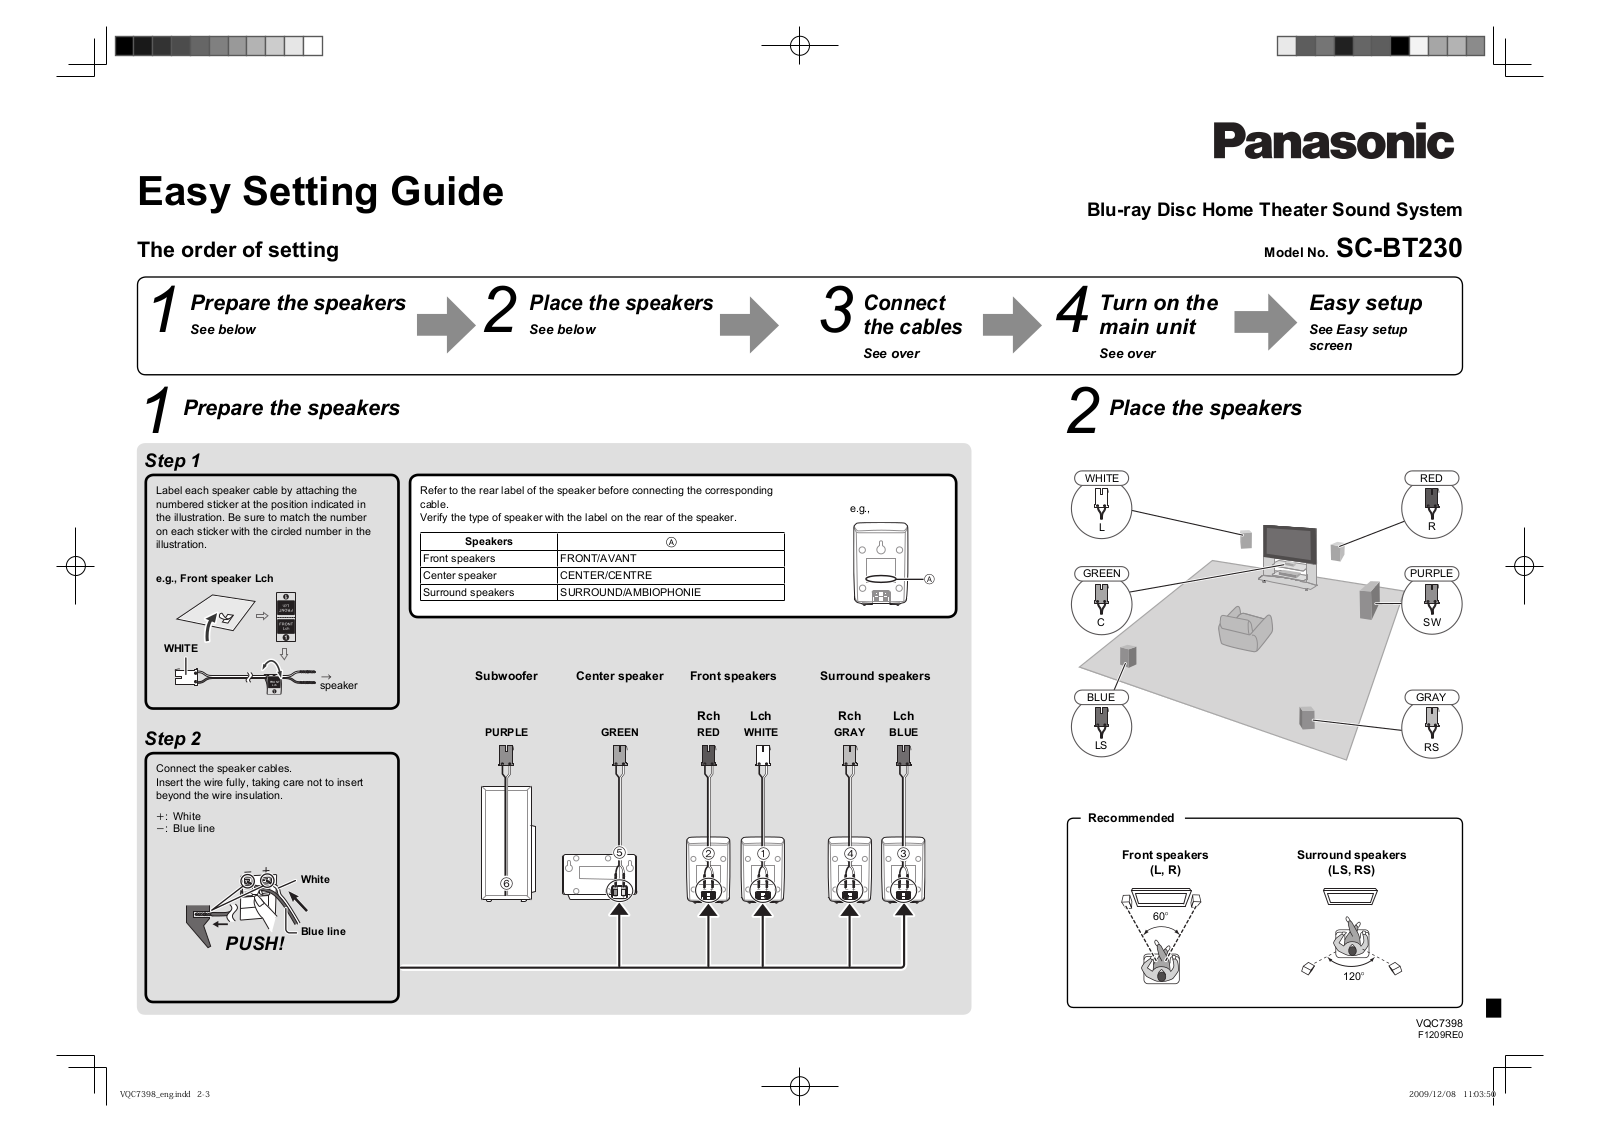 Panasonic SC-BT230, VQC7398 User Manual